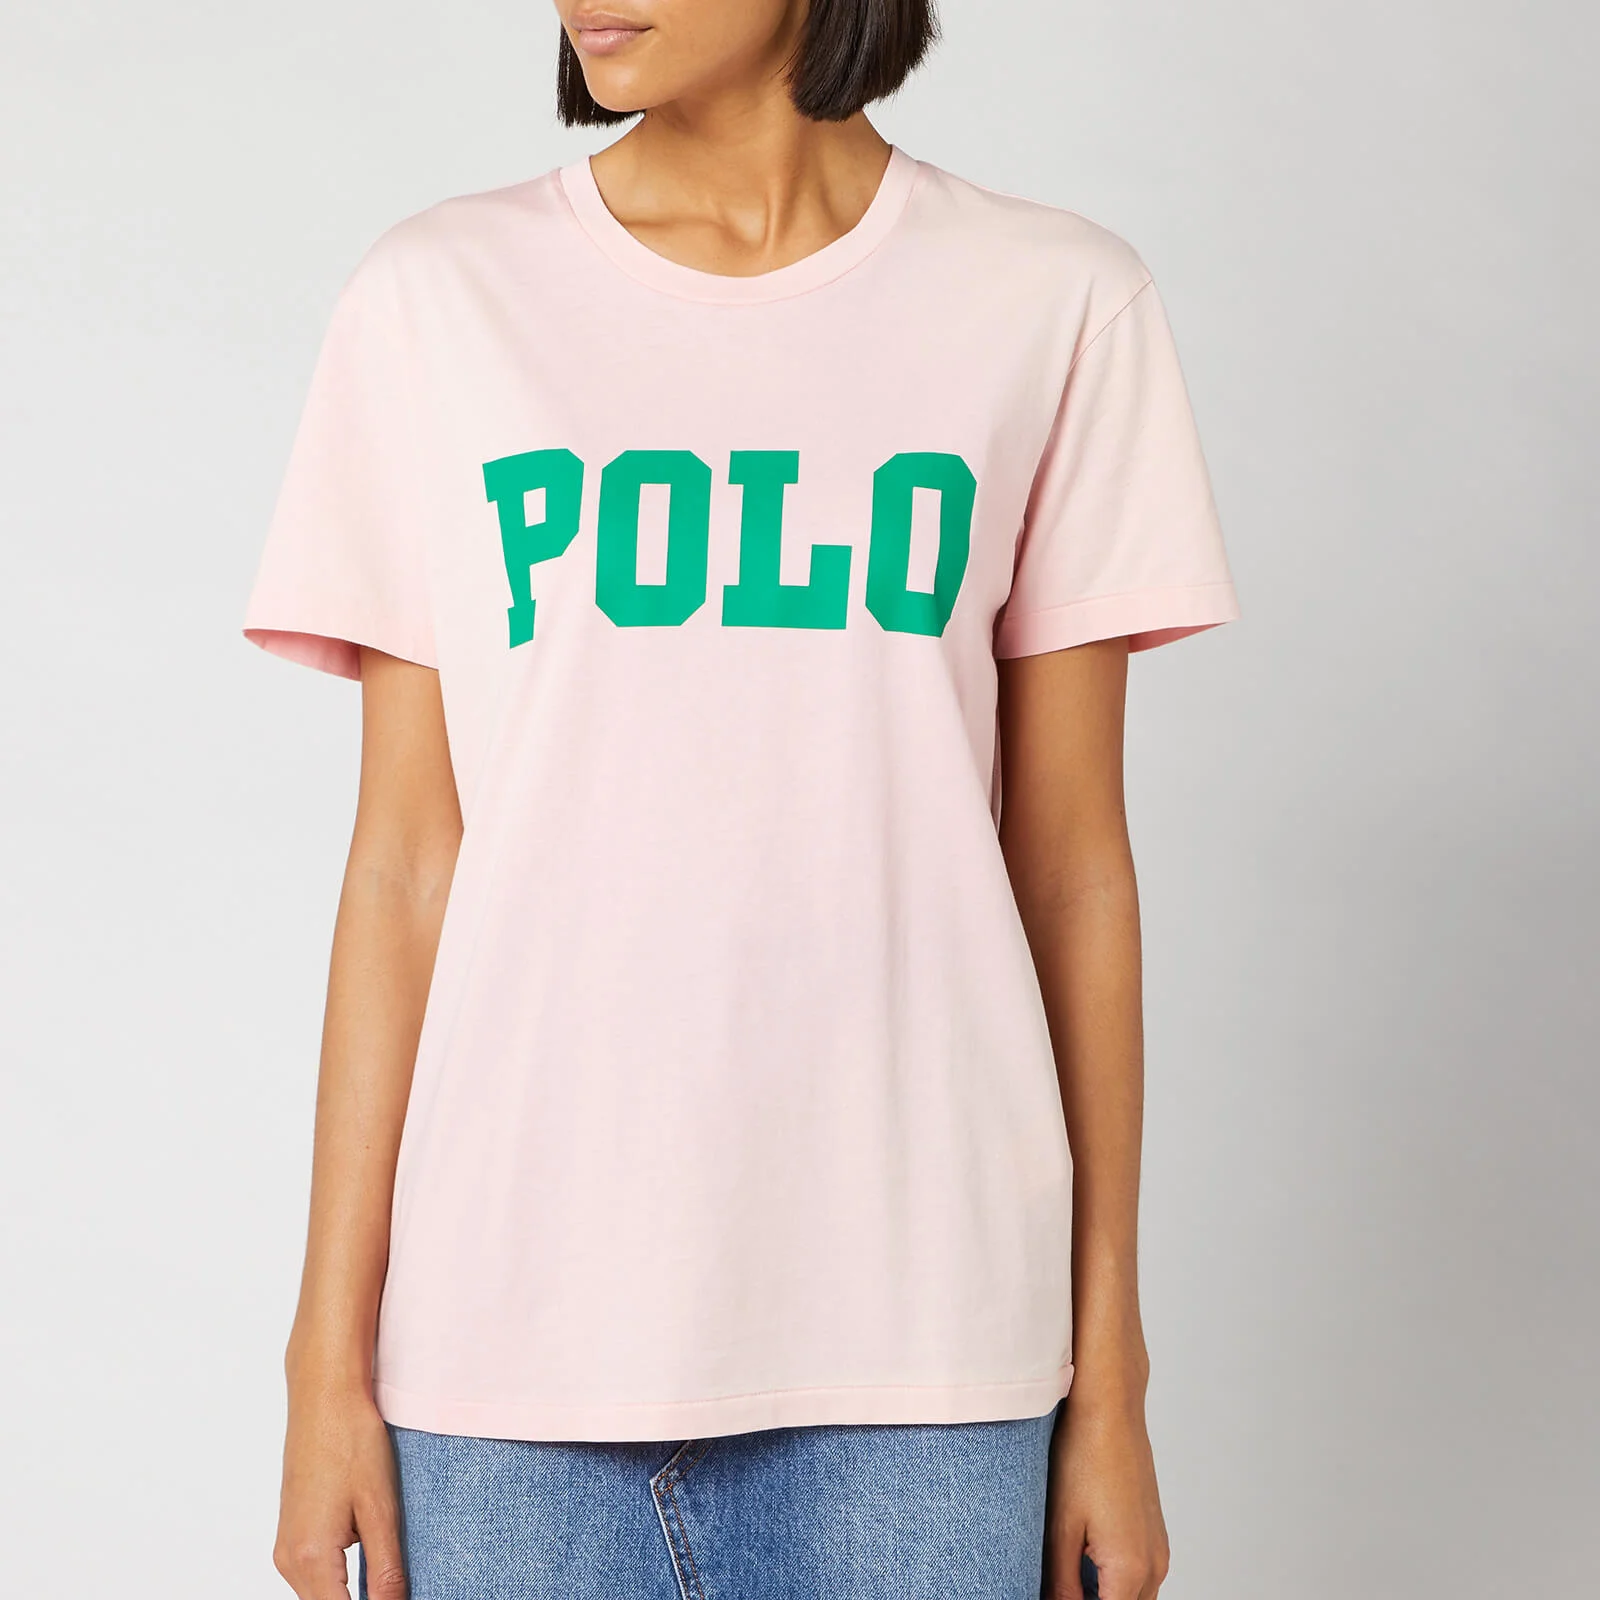 Polo Ralph Lauren Women's Big Polo Short Sleeve T-Shirt - Pink Sand Image 1